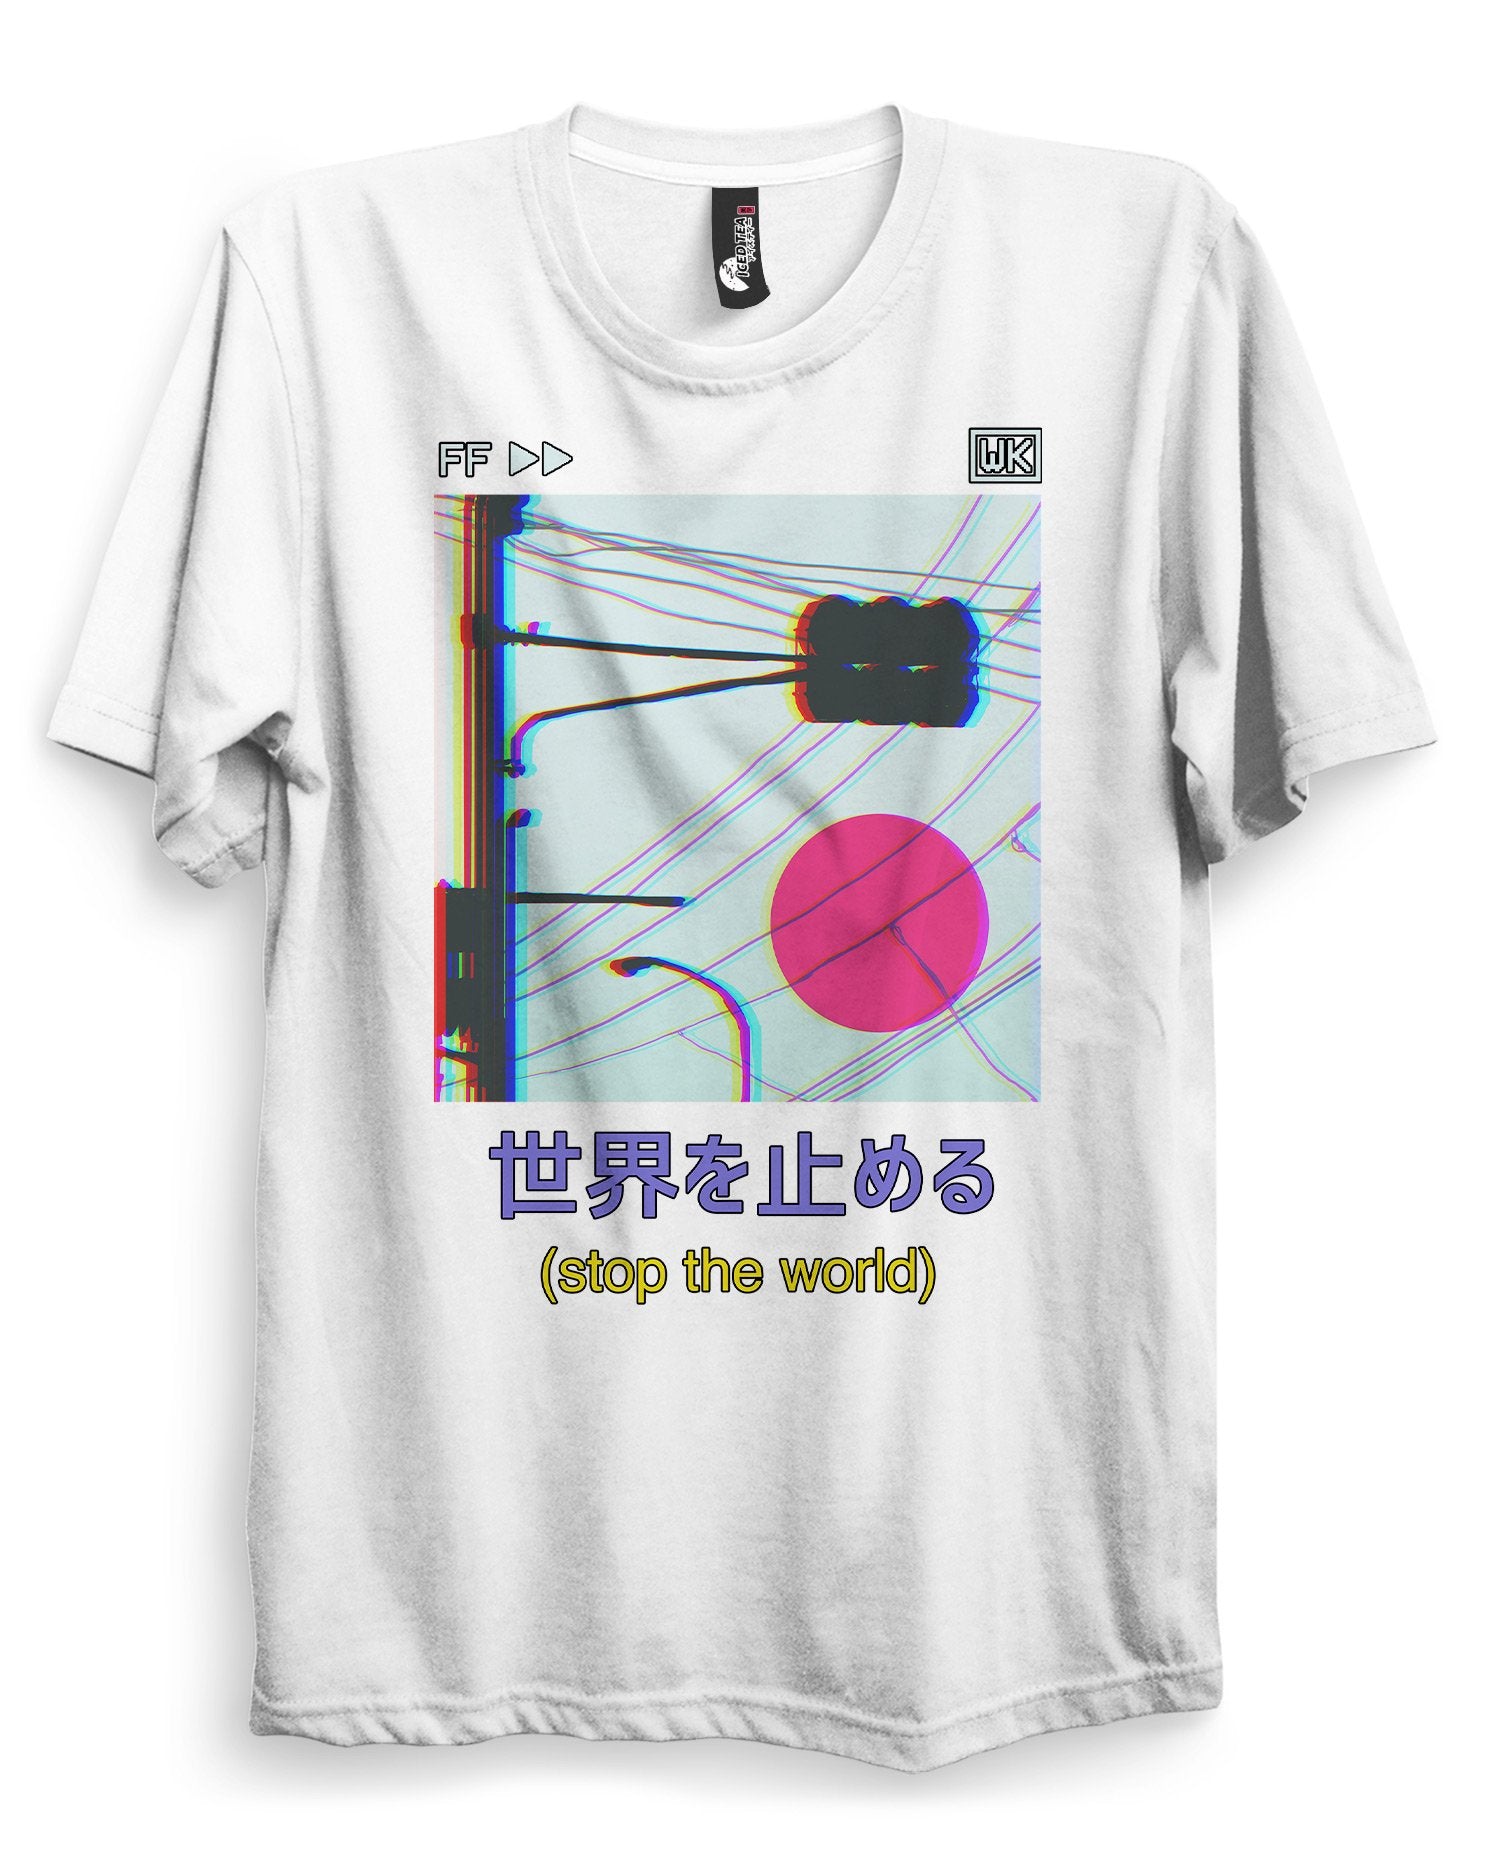 Stop the world - Vaporwave T-Shirt - Dark Aesthetics and Anime Clothing Streetwear